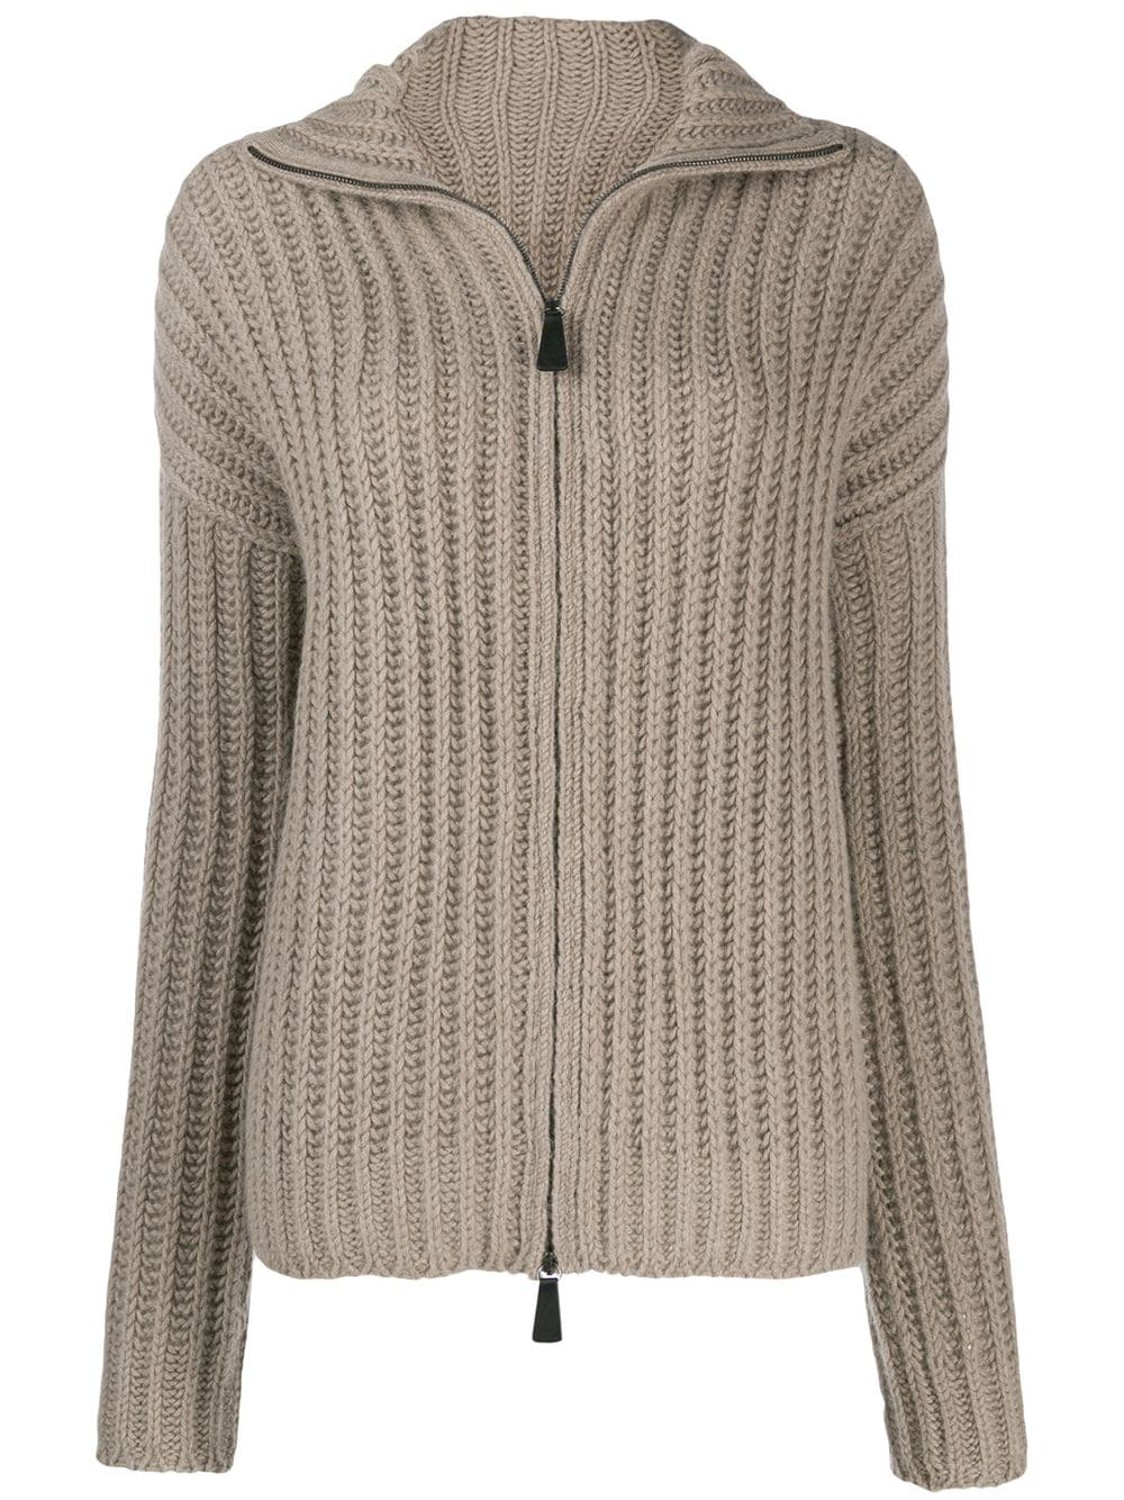 shop Dusan  Maglie: Cardigan Dusan, collo alto, zip a chiusura davanti, a maglie larghe, color grigio.

Composizione: 75% lana, 25% alpaca.
 number 1550